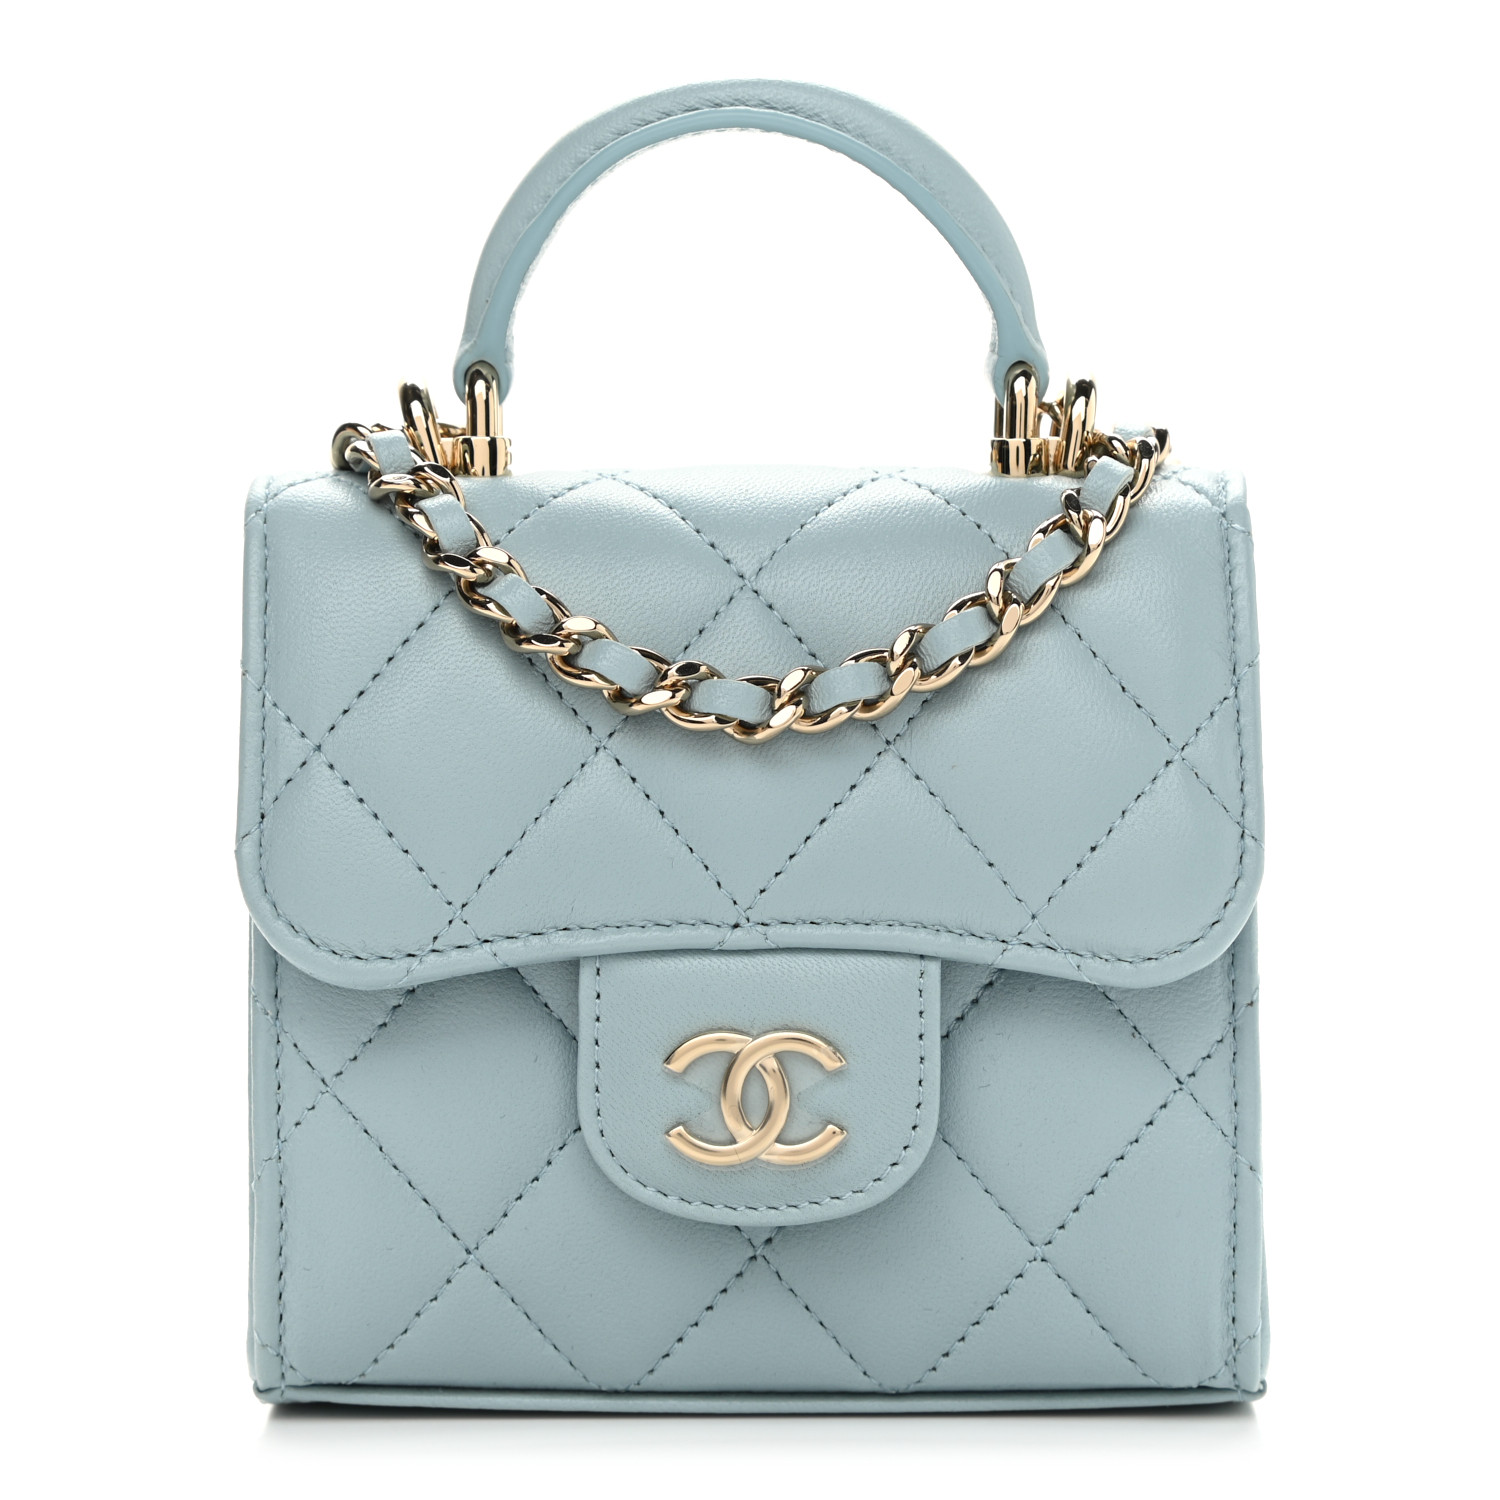 Used Designer Handbags - Pre Owned Chanel Bags